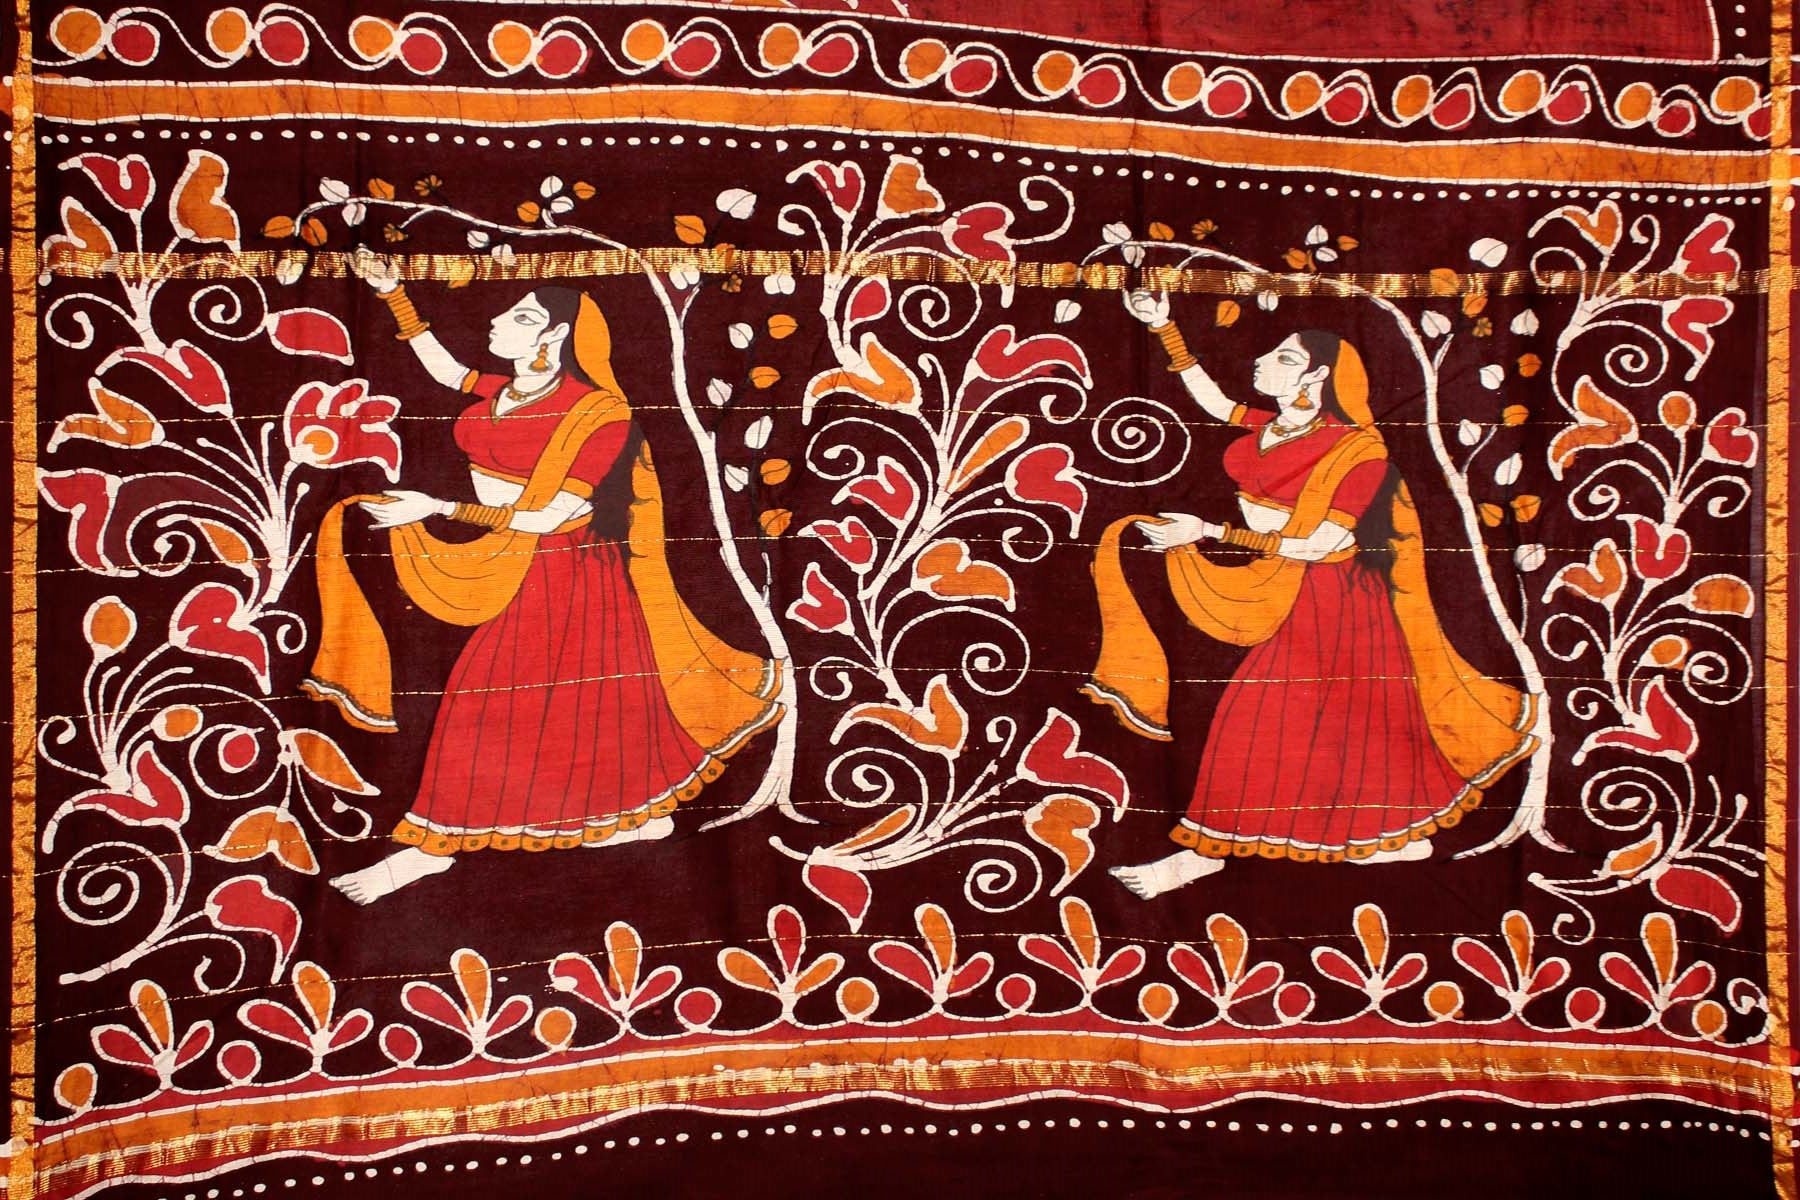 Buy Artisanal Indian Textiles - Block-Prints, Batiks and Handloom